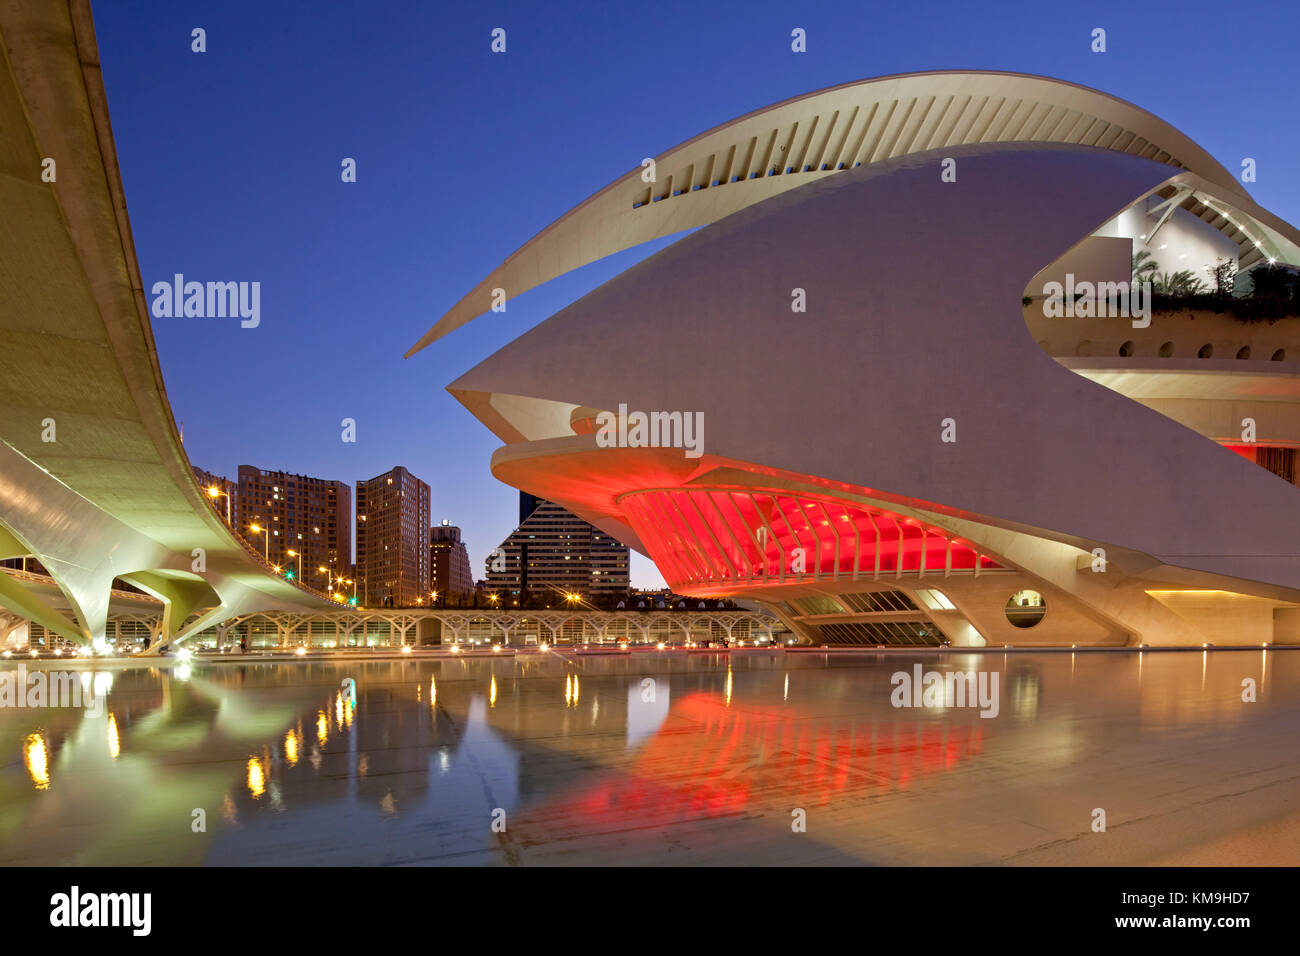 Das Palau de Les Arts Reina Sofia von Calatrava, Valencia, Spanien Stockfoto